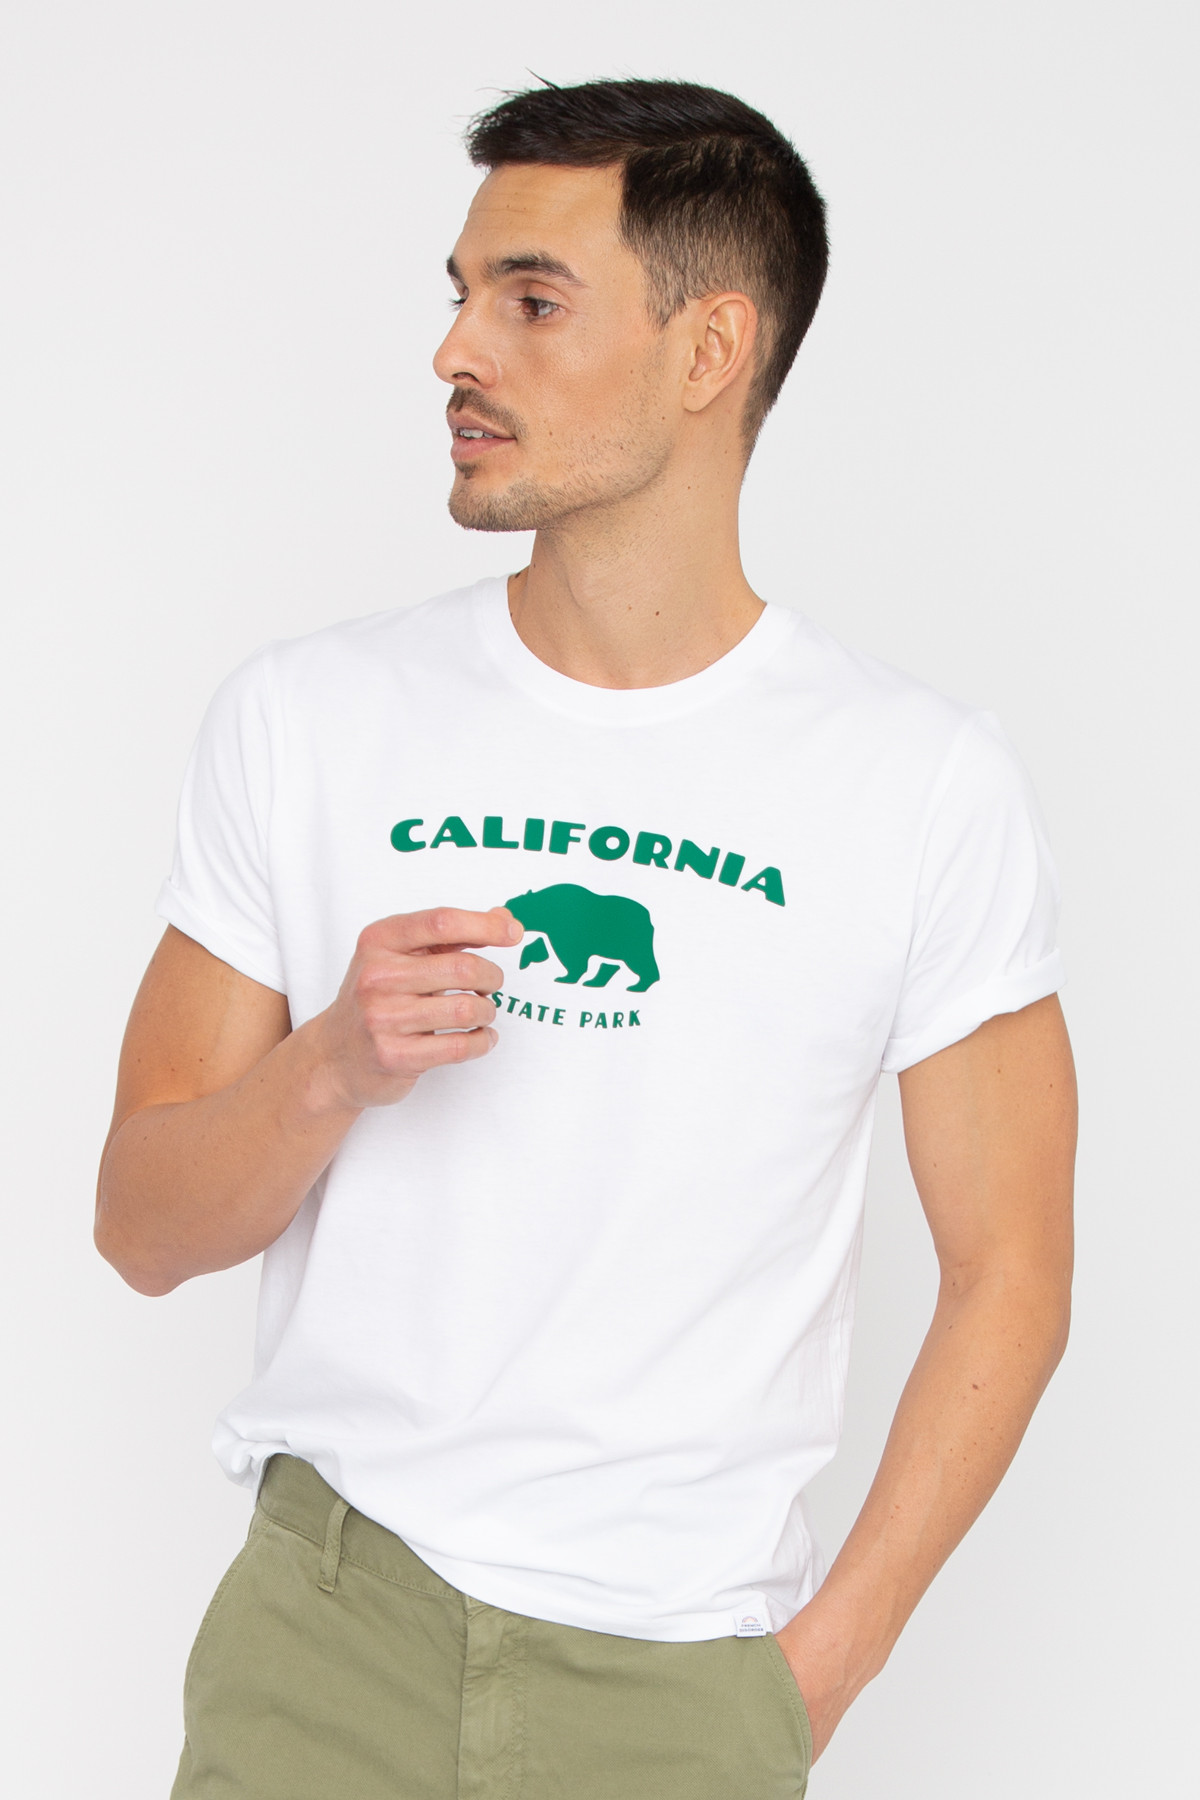 Tshirt Alex CALIFORNIA STATE